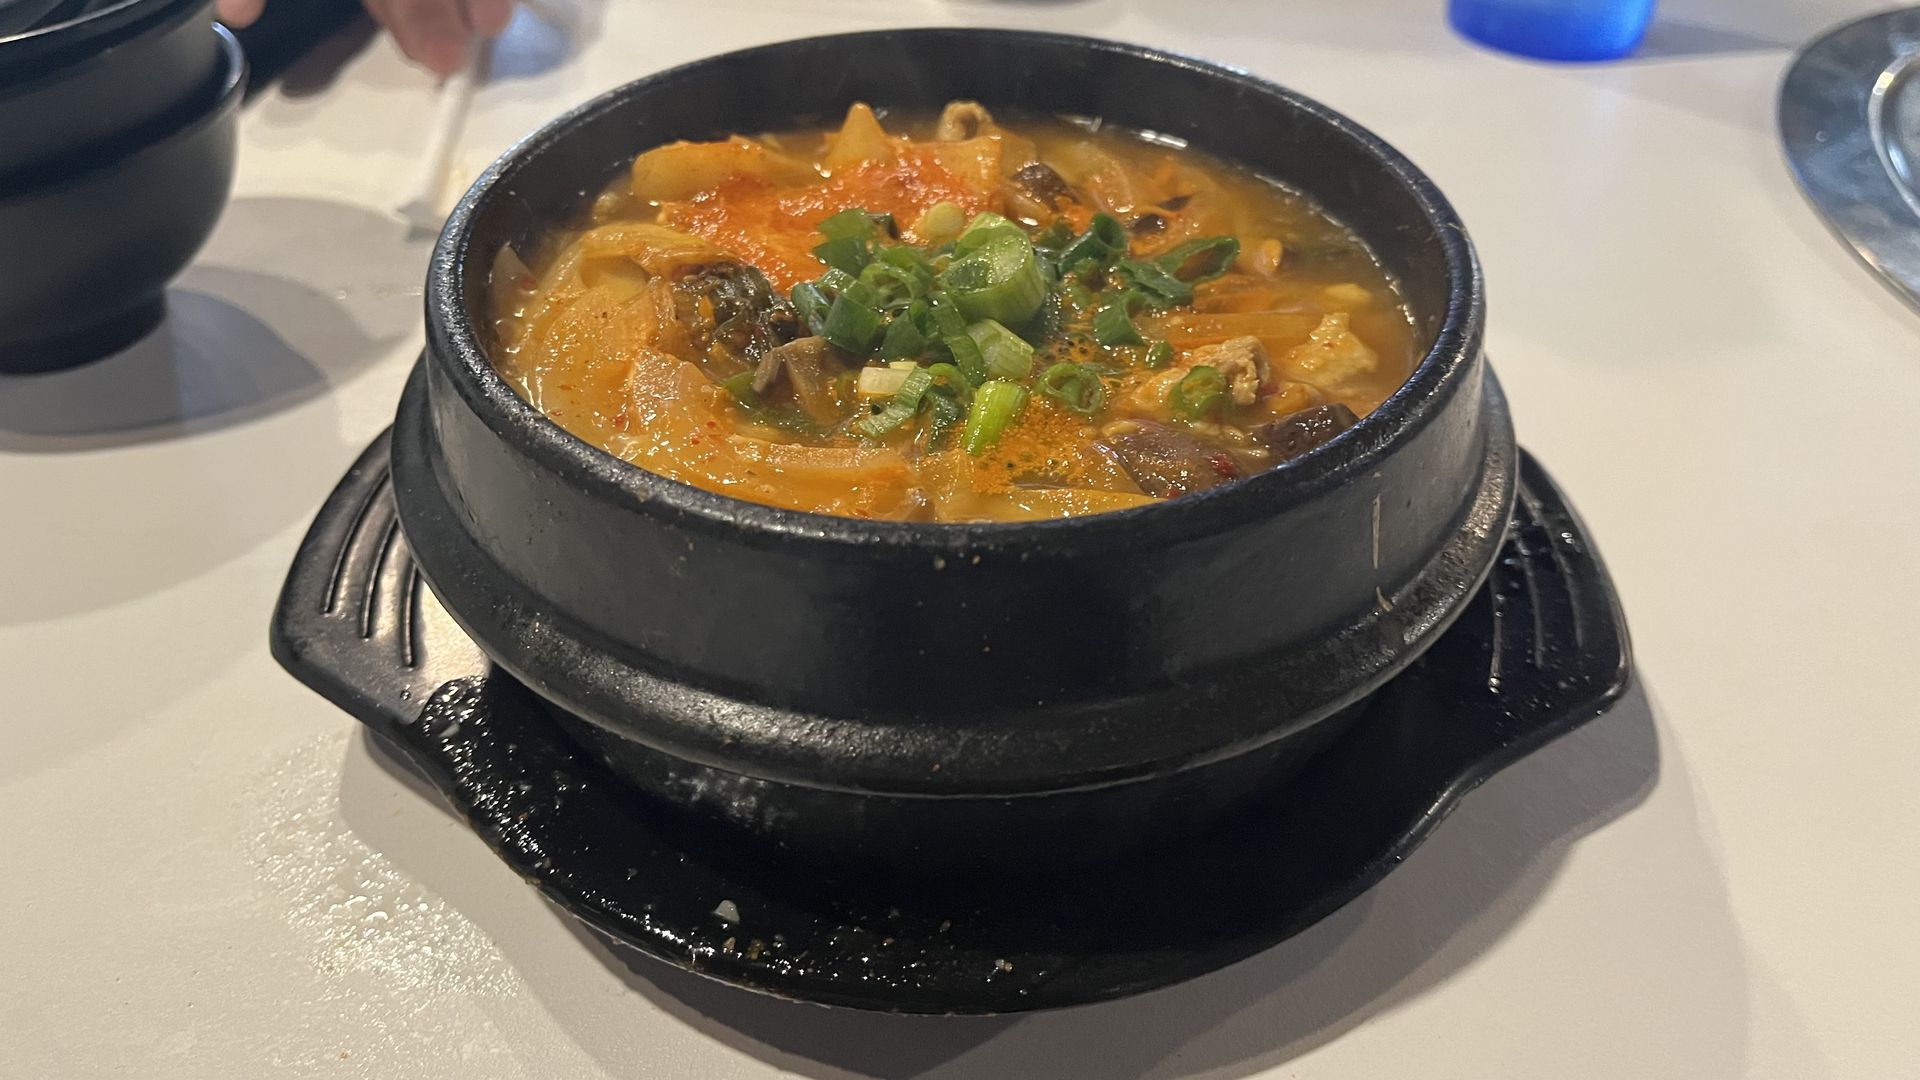 Kimchi stew in a black bowl